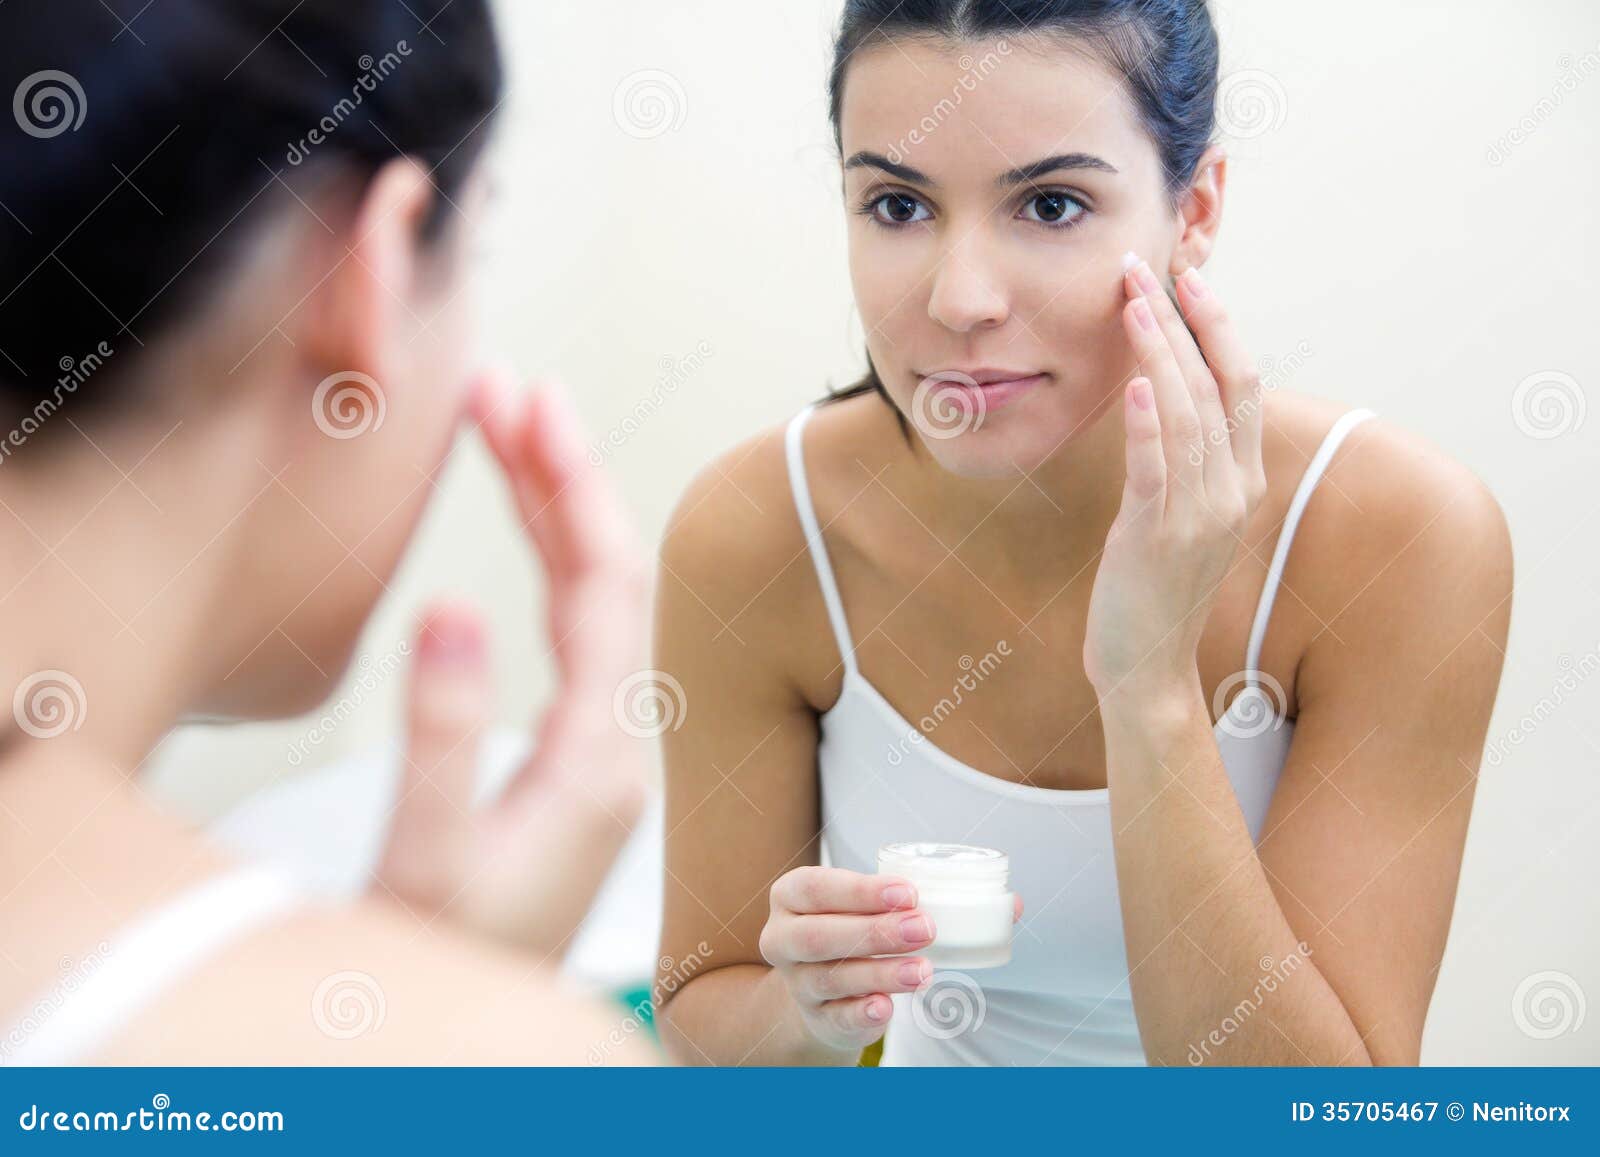 body care. woman applying cream on face